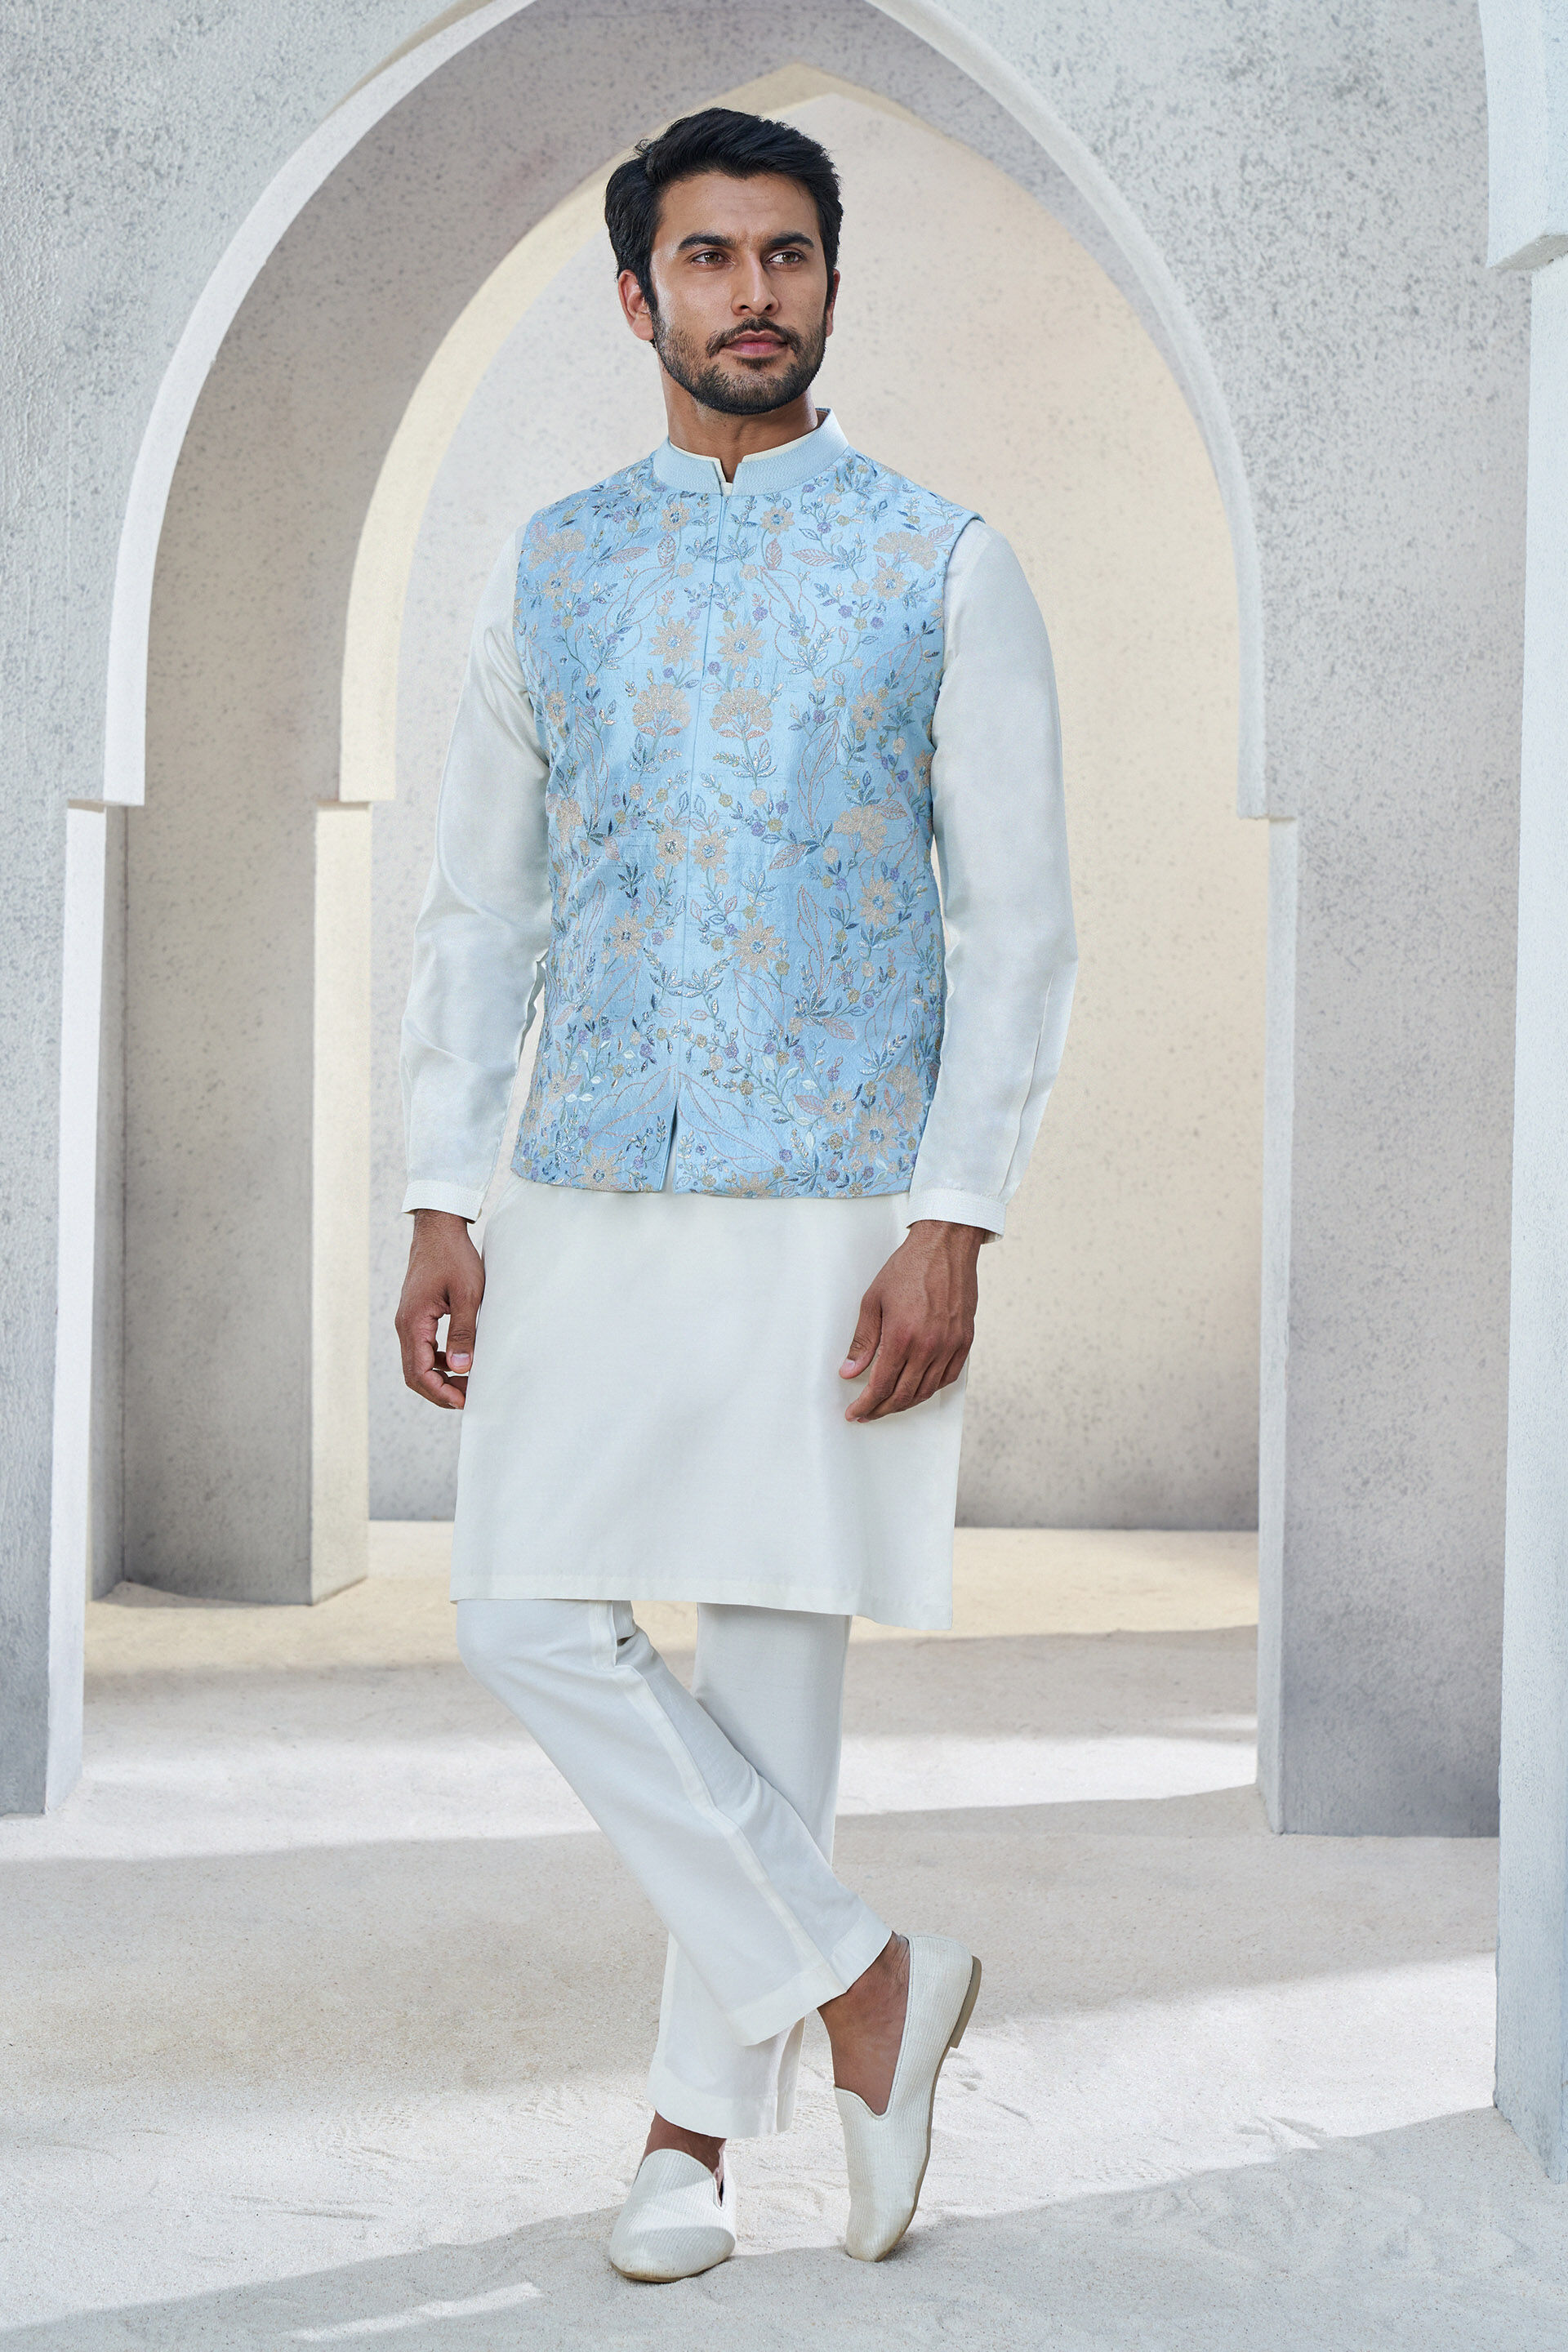 Shop Latest Mens Wedding Nehru Jacket Style at Best Prices USA UK